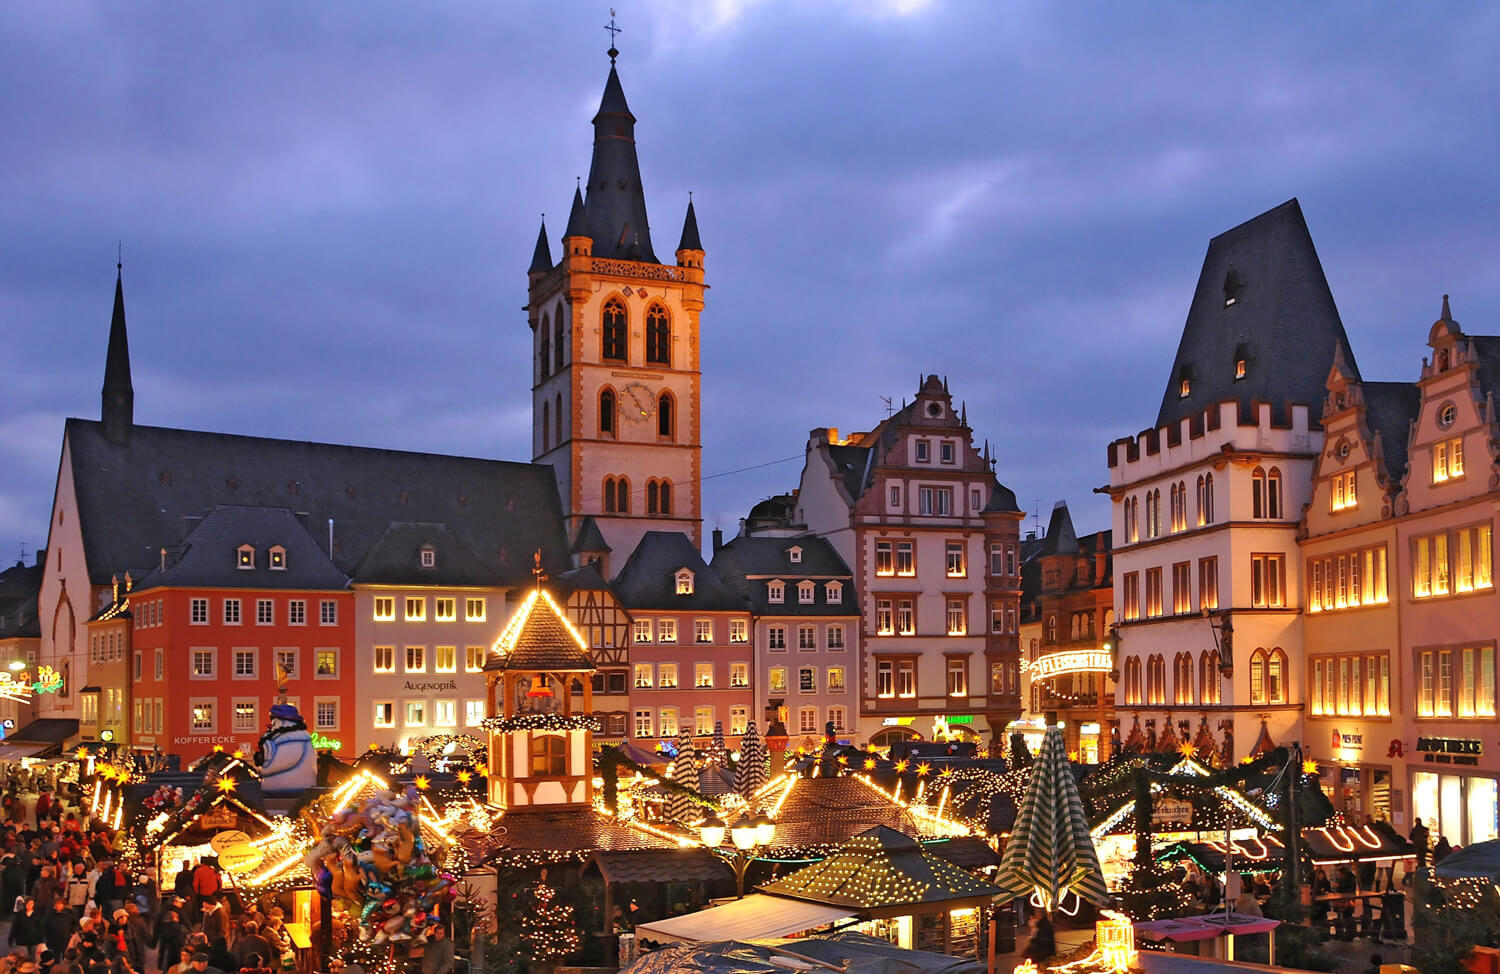 Trier Christmas market at night